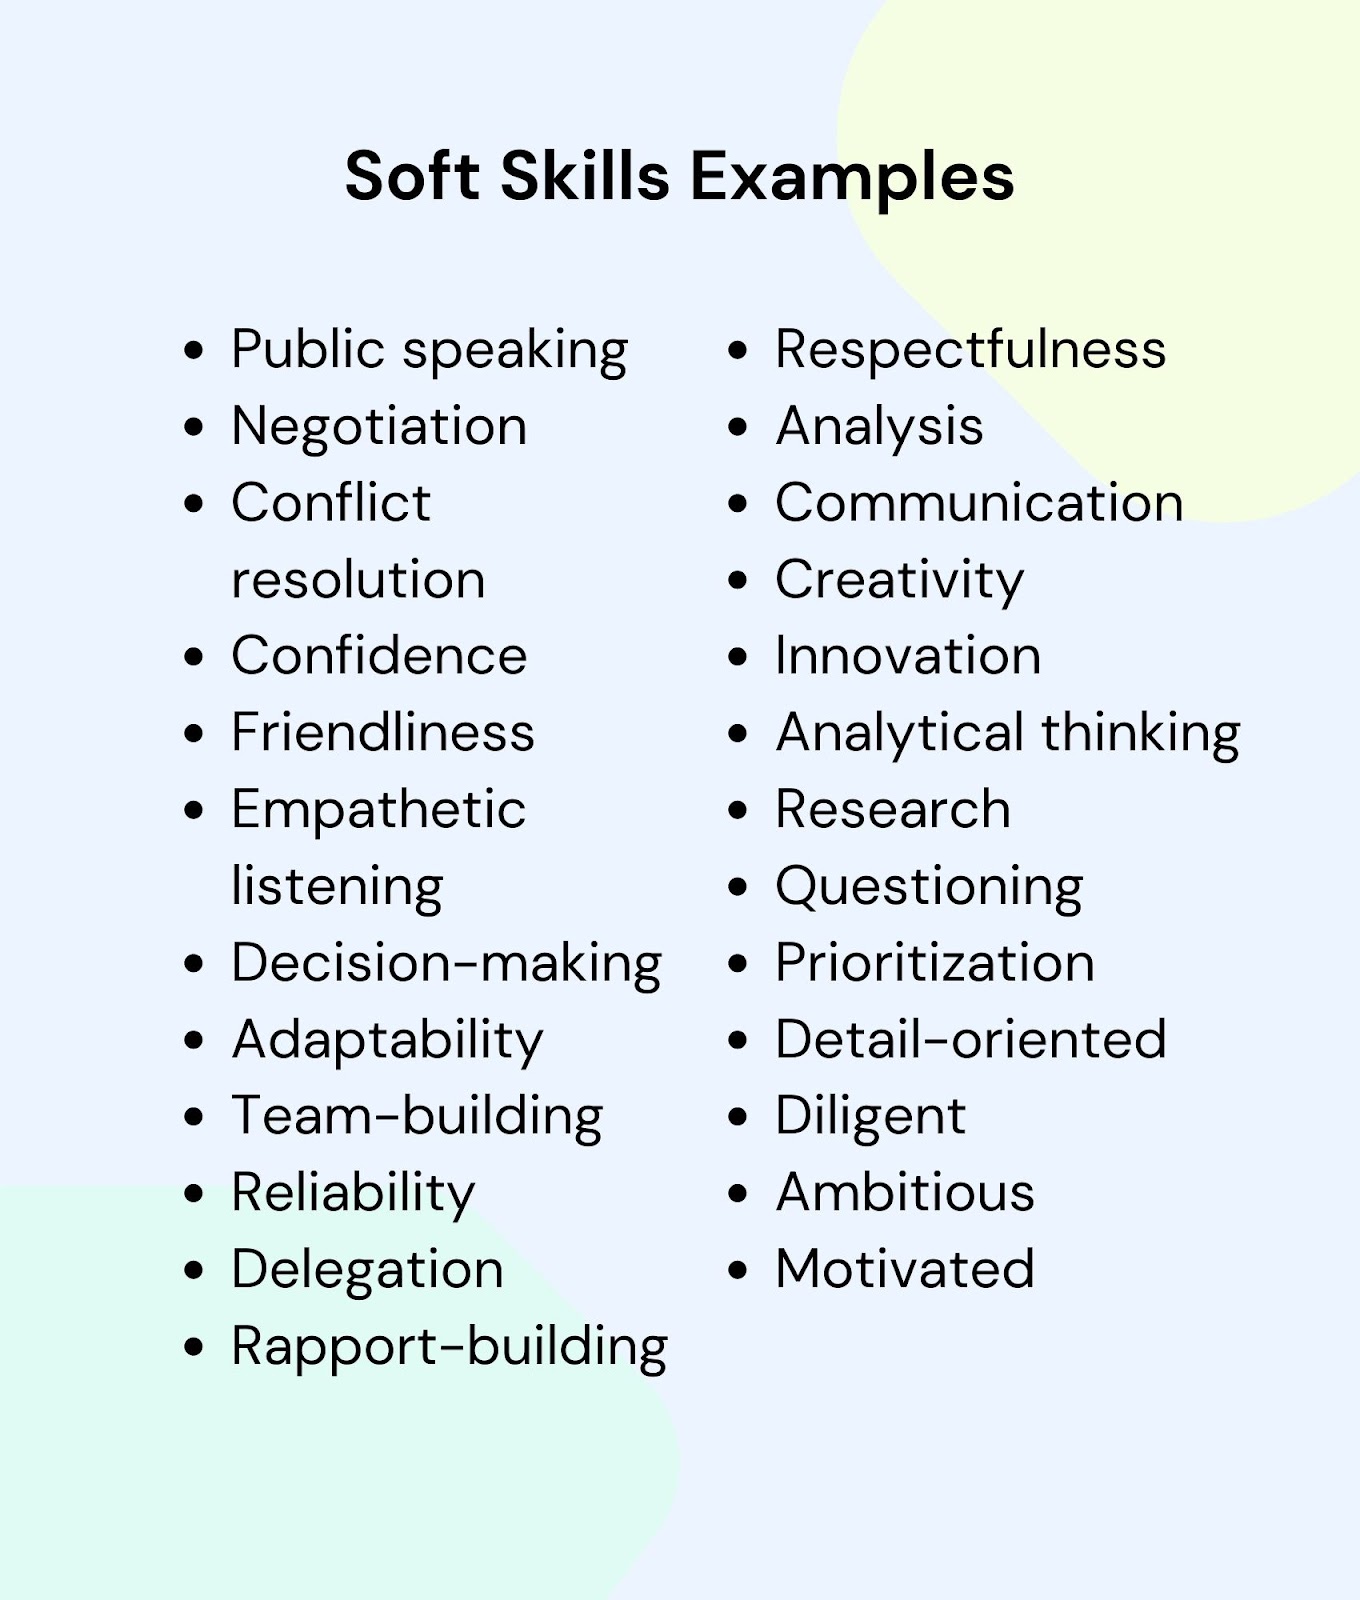 soft skills research harvard